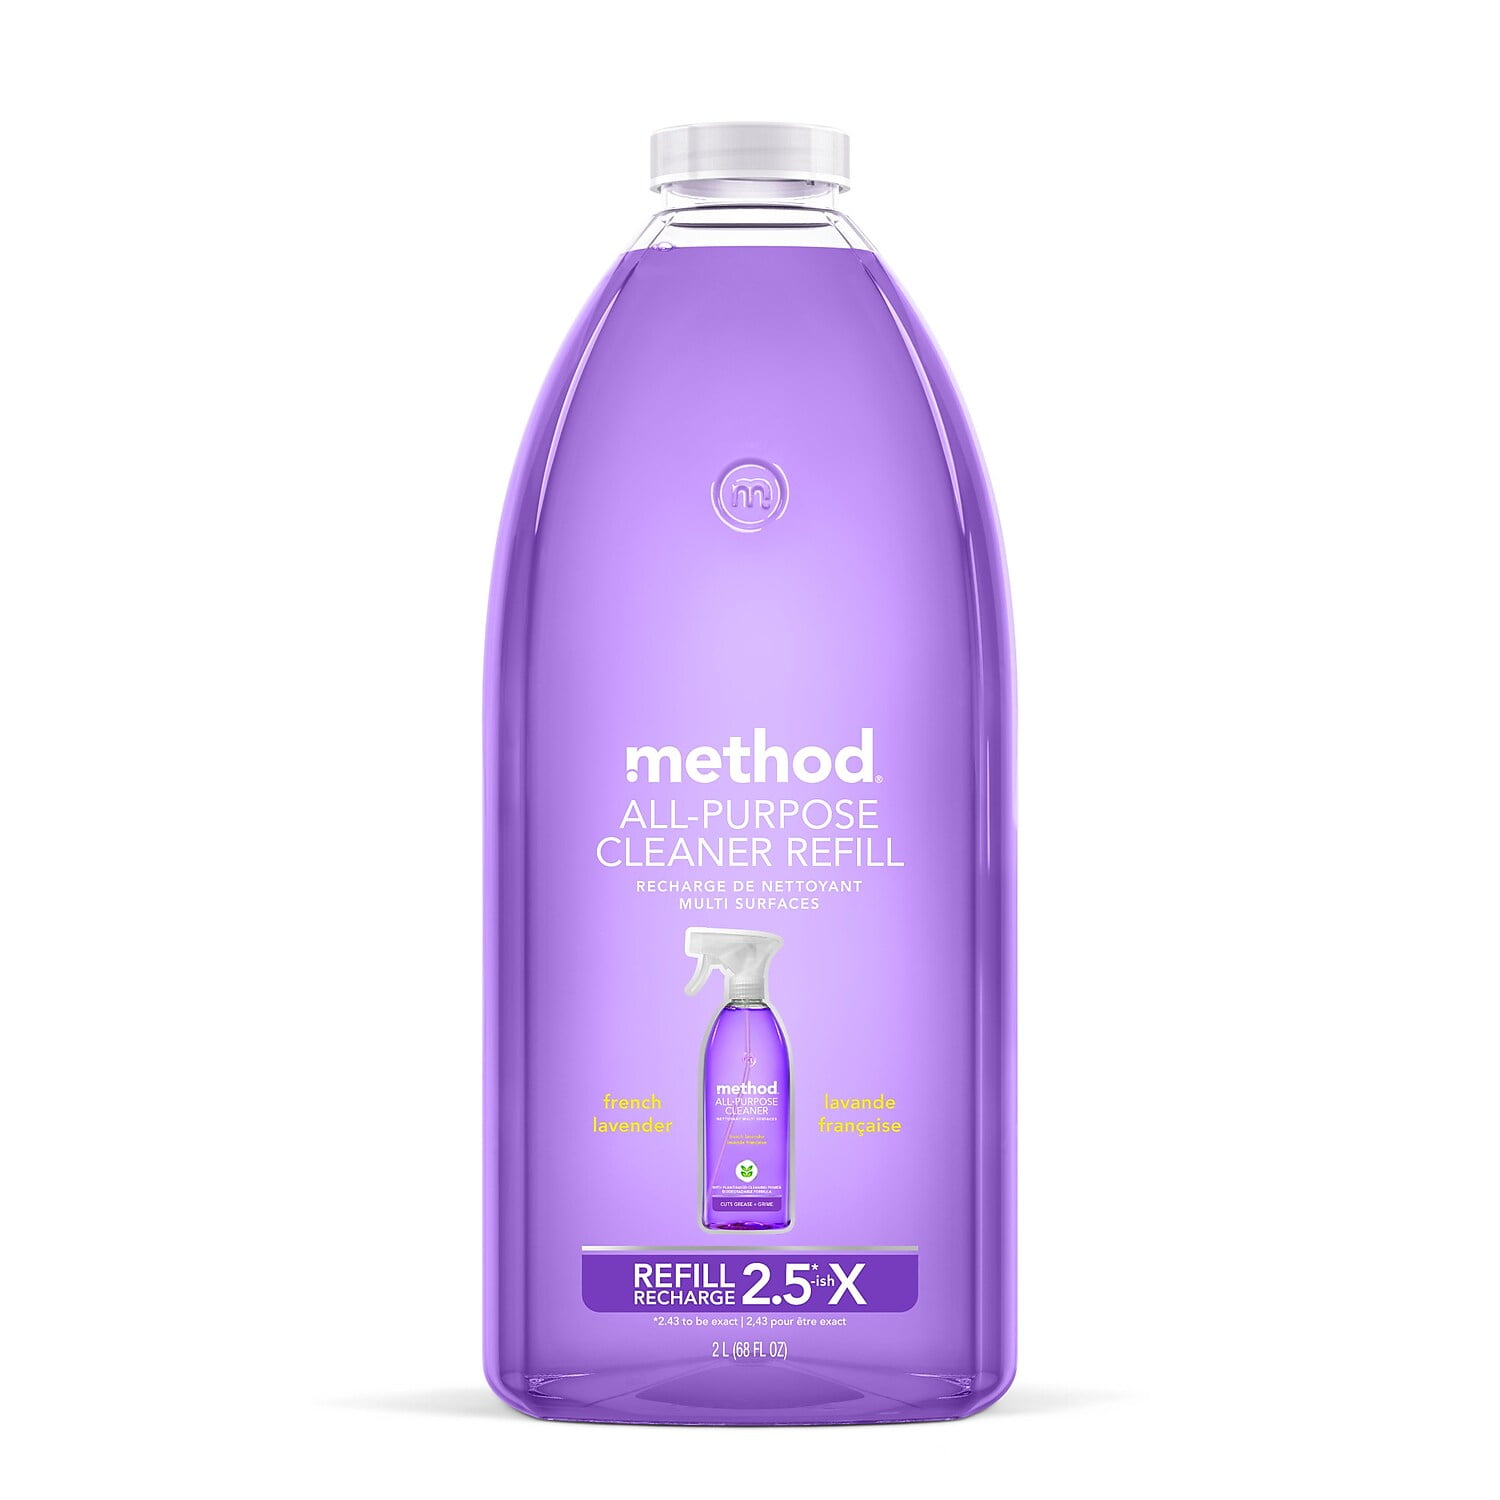 Method All-Purpose Cleaner, French Lavender 28 Fl Oz, Multi-Purpose